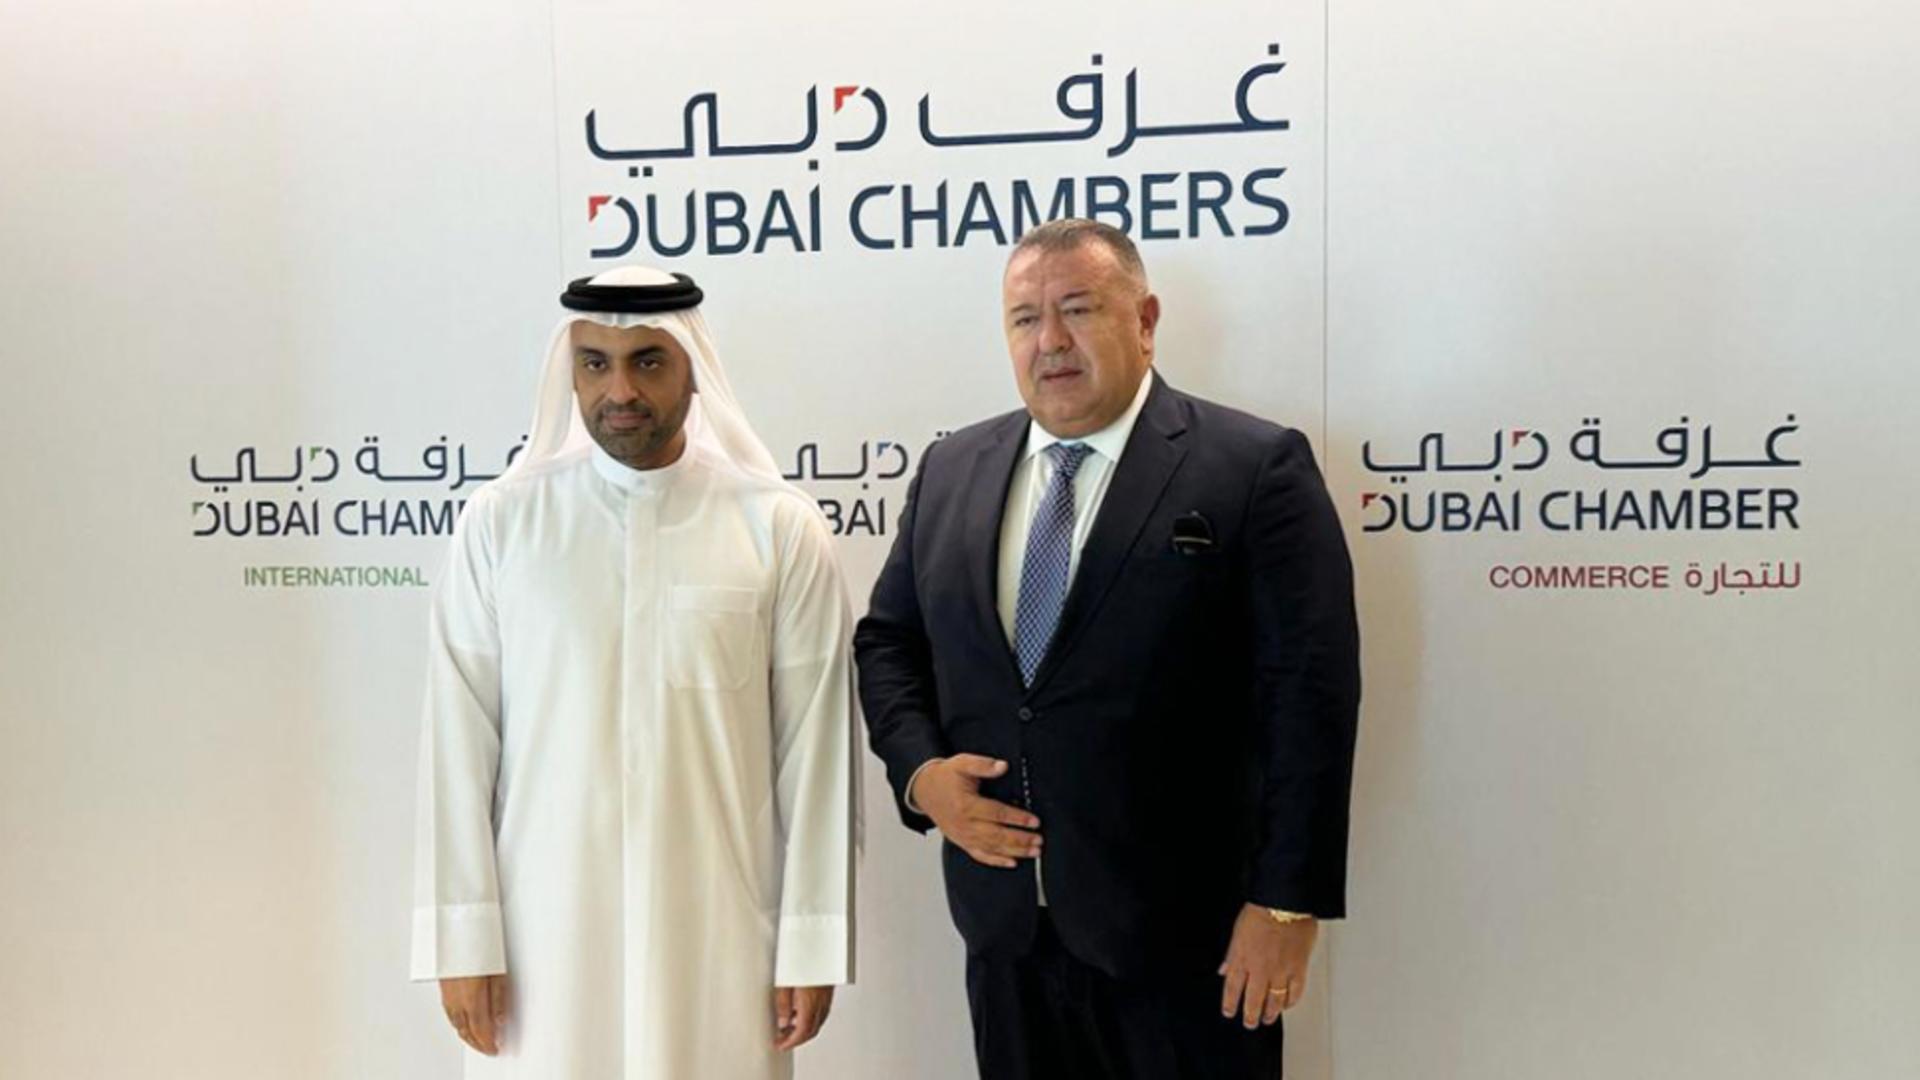 Președintele CCIR Mihai Daraban și președintele C.C. Dubai, Mohammad Ali Rashed Lootah